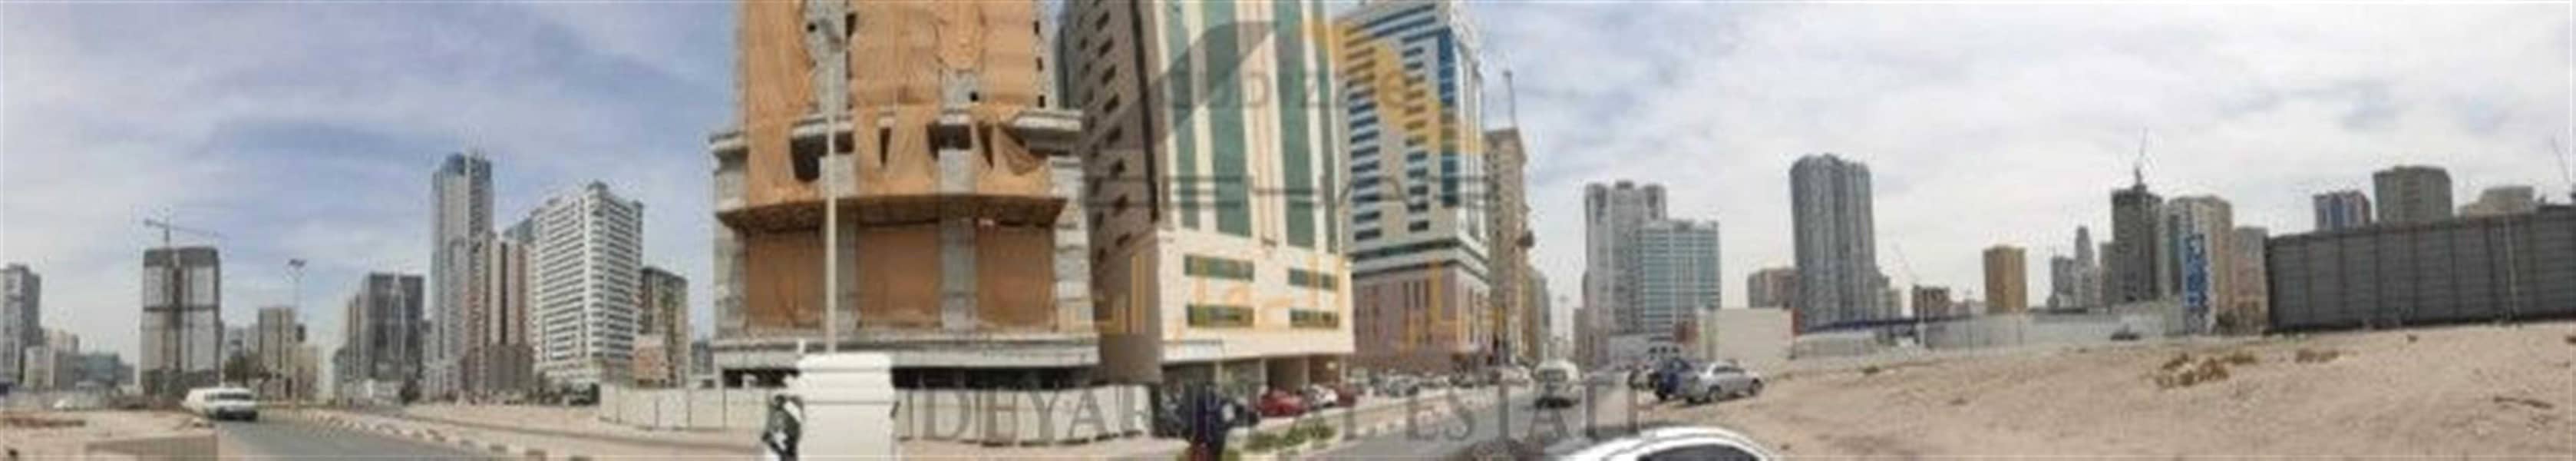 Full Building G+16 Apartment For Sale|al Taawun|Sharjah